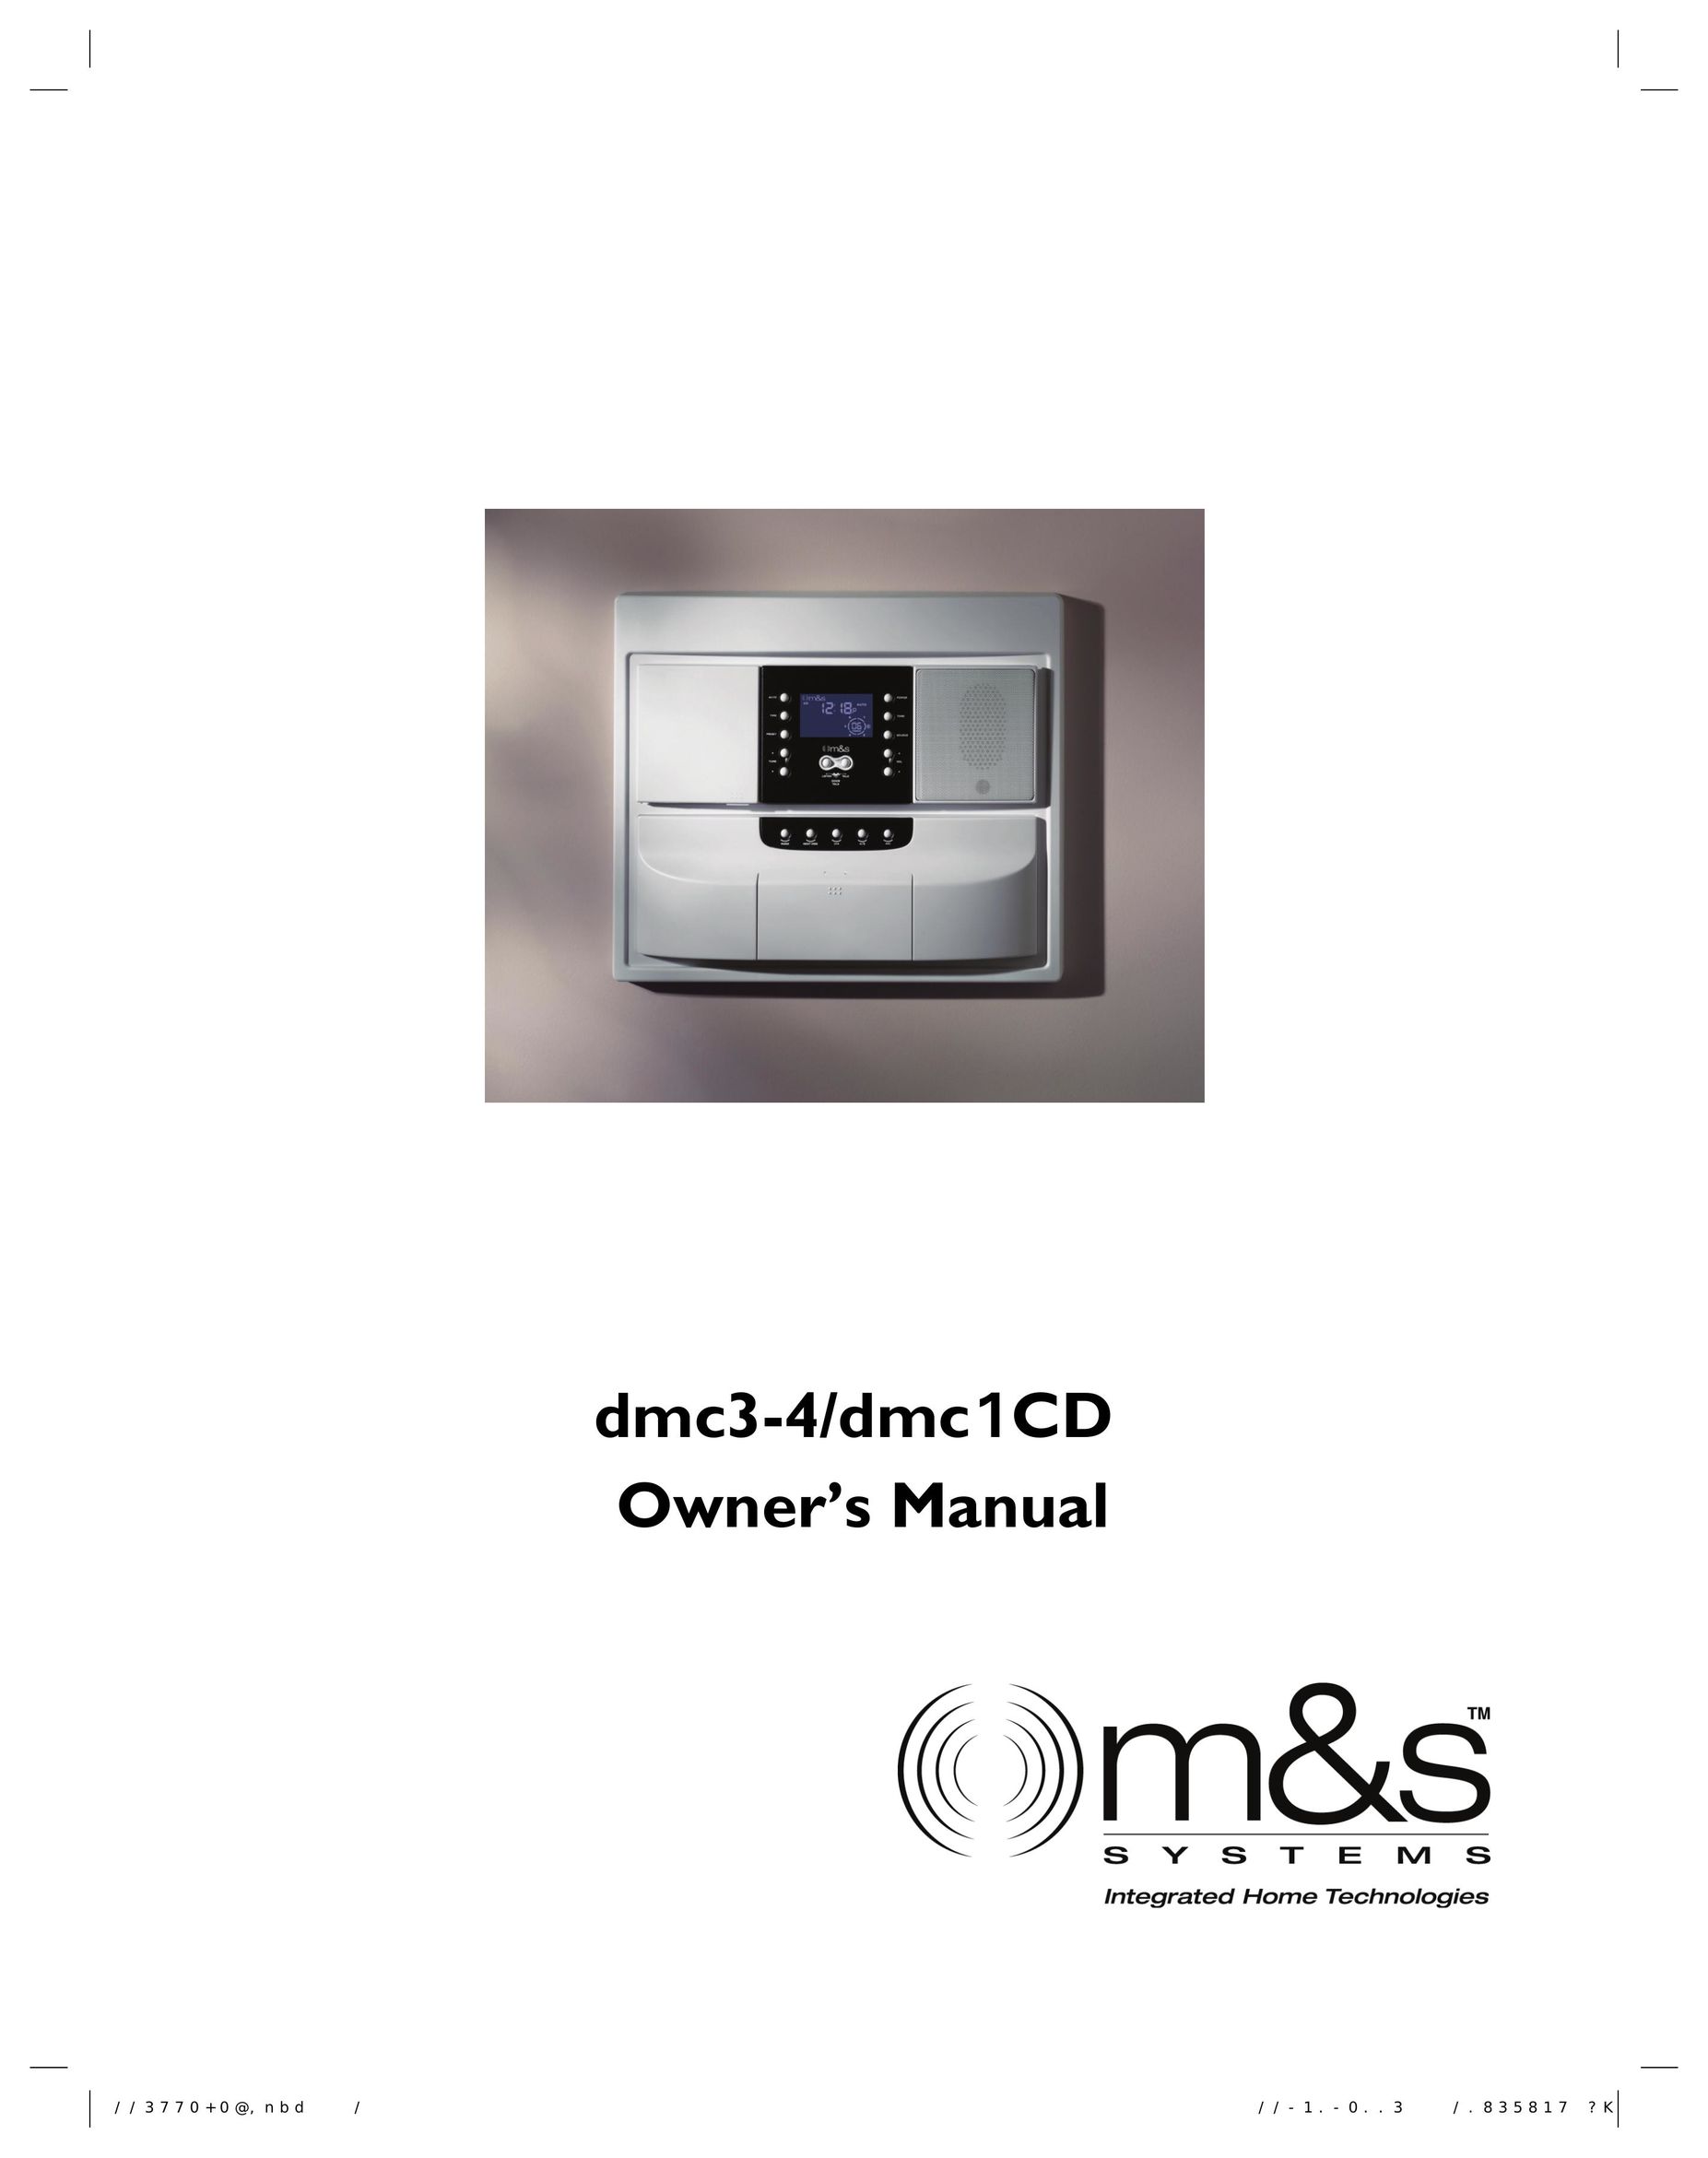 M&S Systems dmc3-4/dmc1 CD Player User Manual